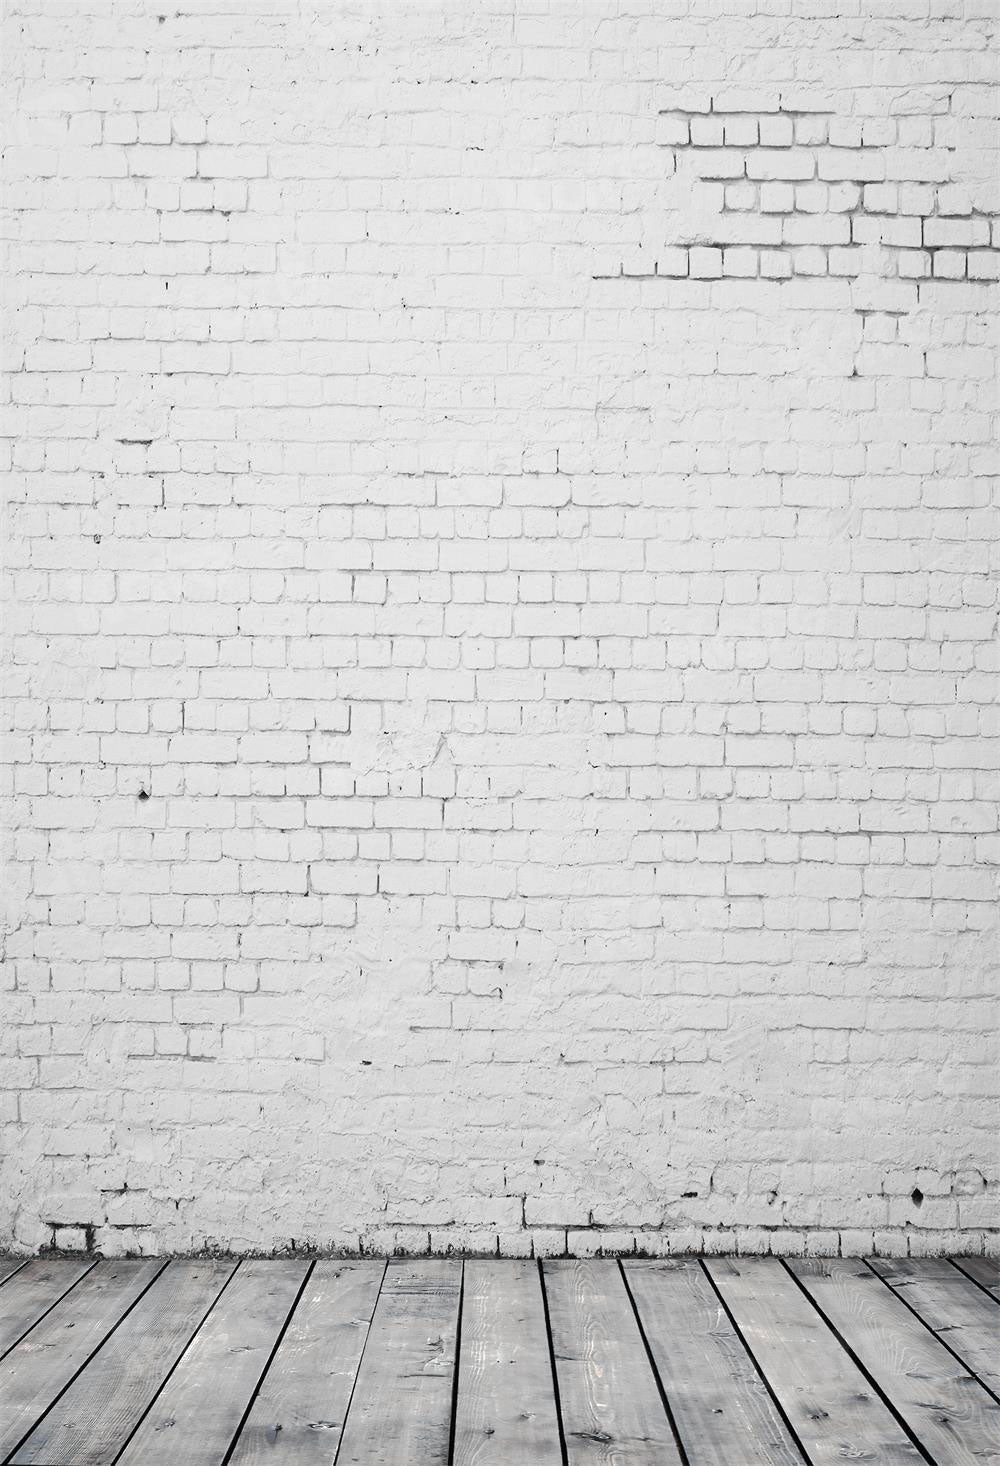 Kate Wedding White Brick Wall Floor Backdrop Photography - Katebackdrop